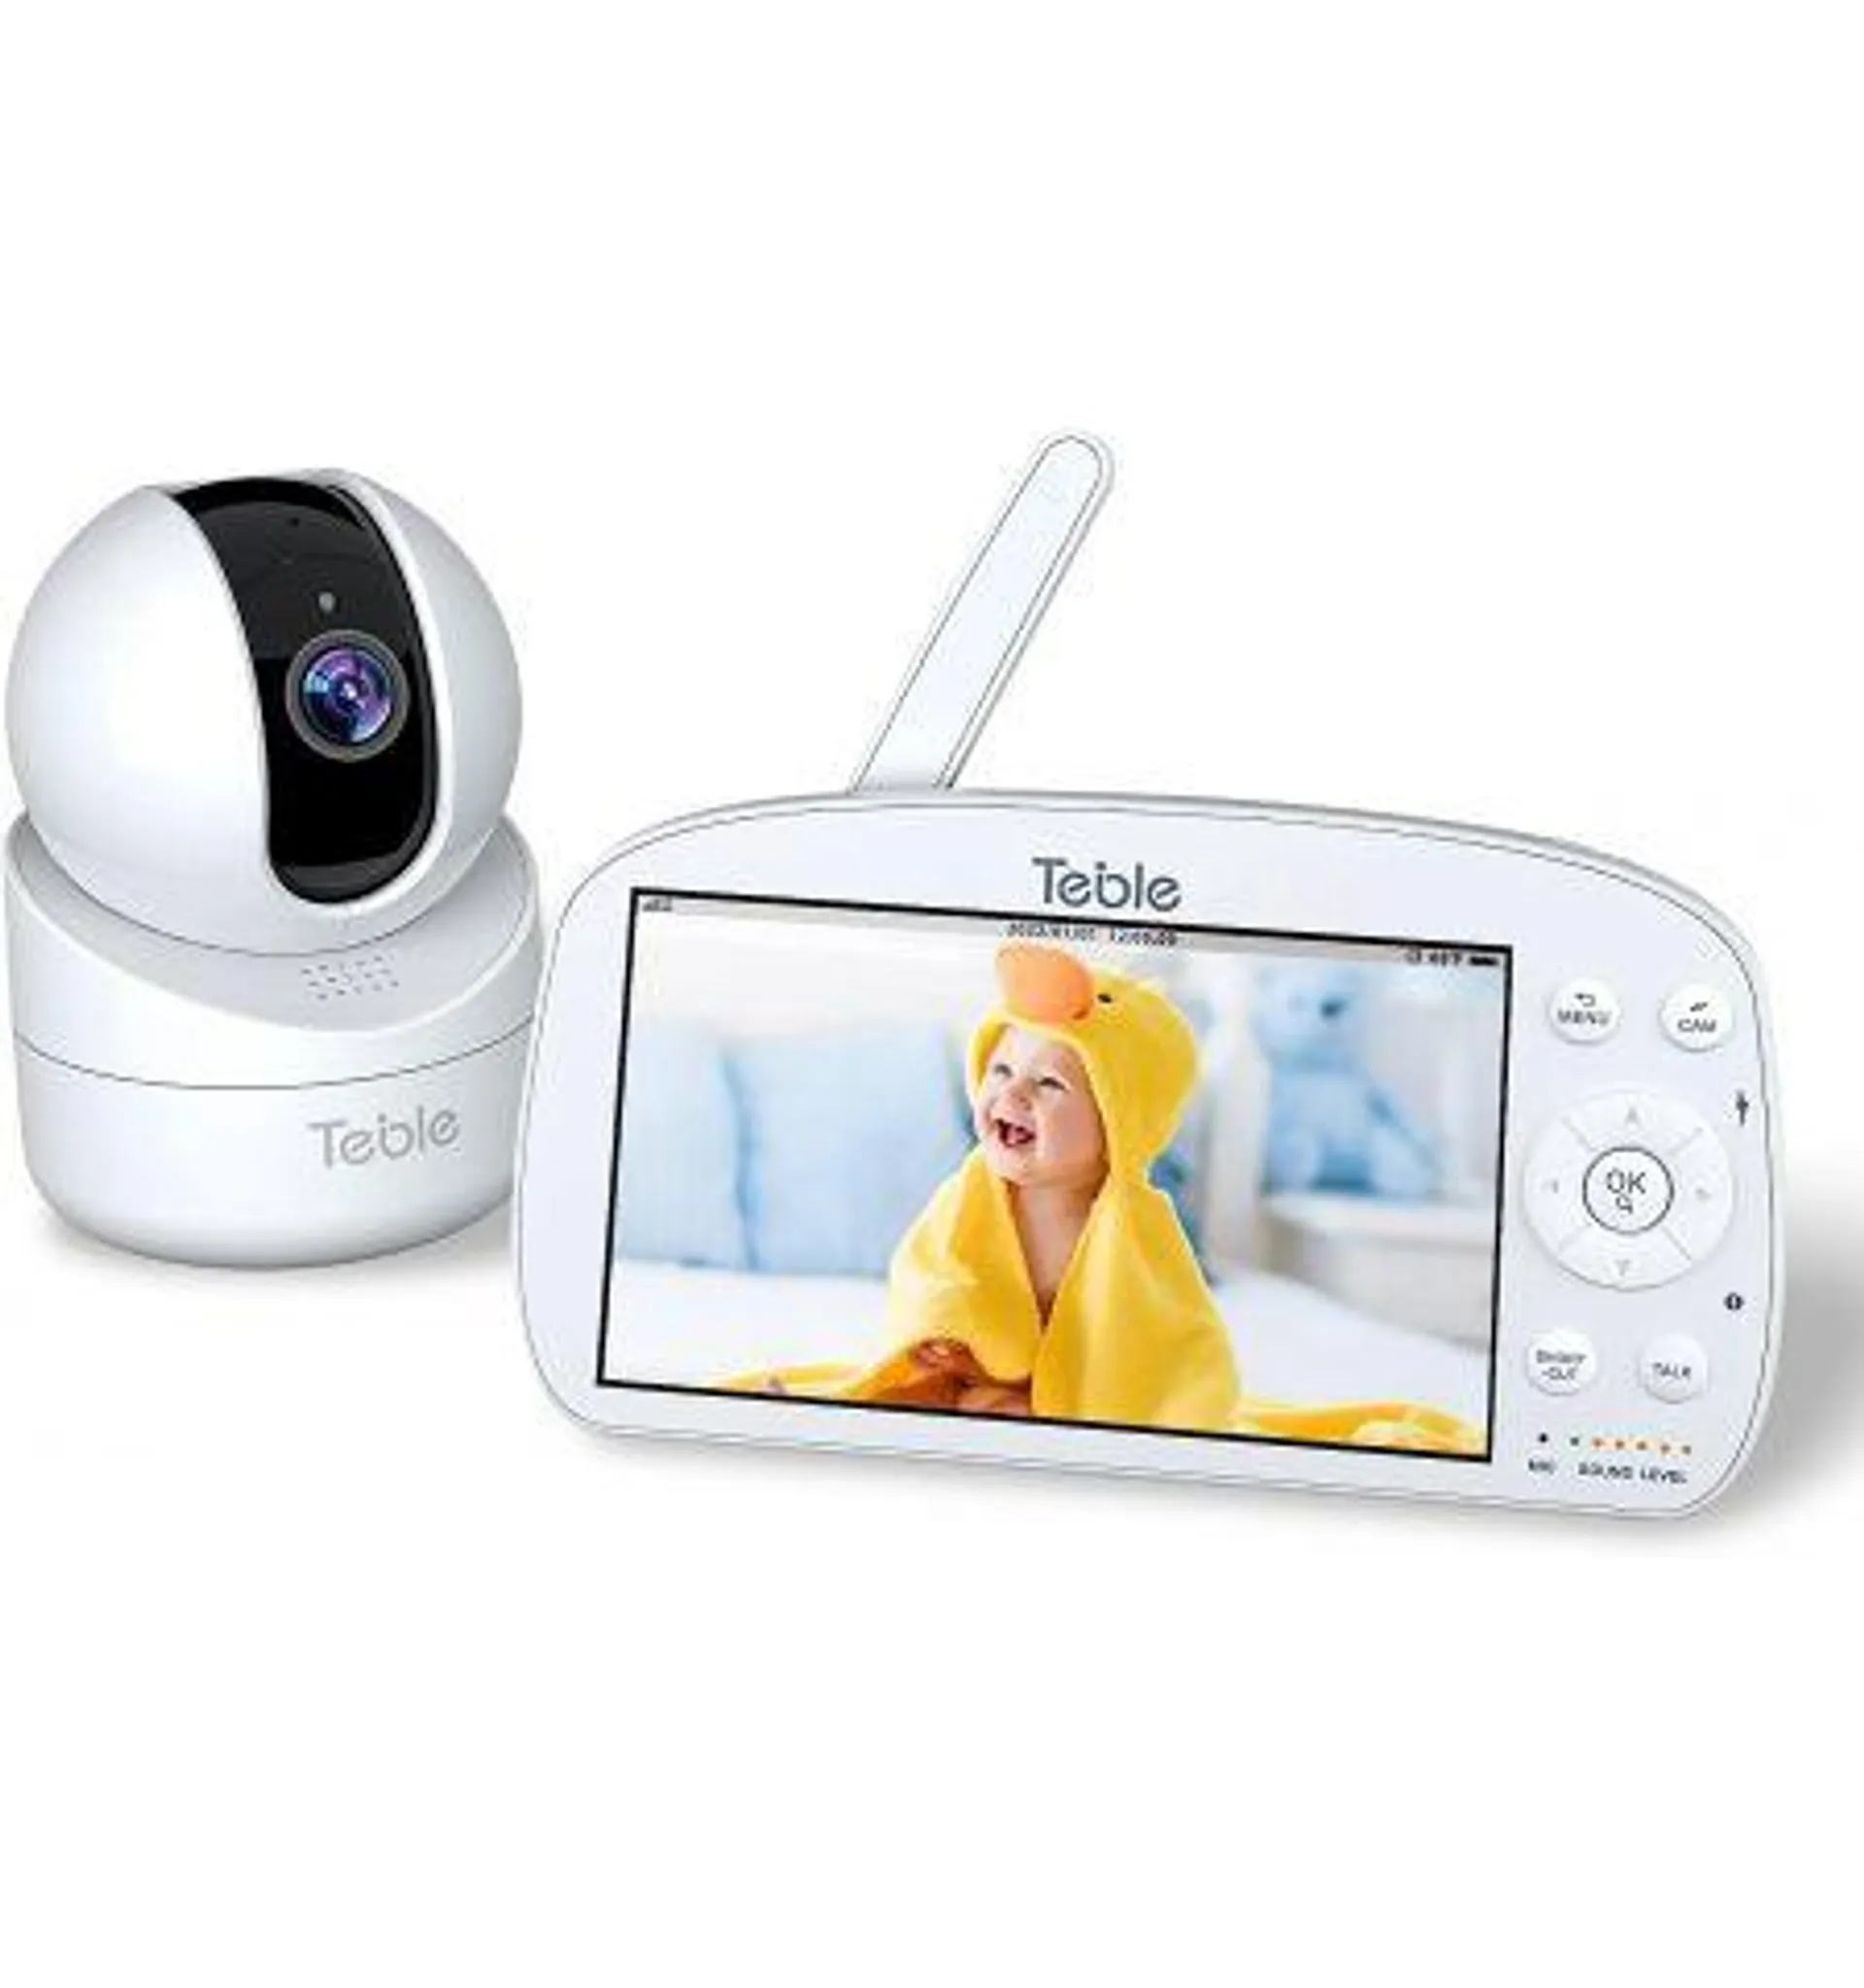 Teble Wireless Video Baby Monitor